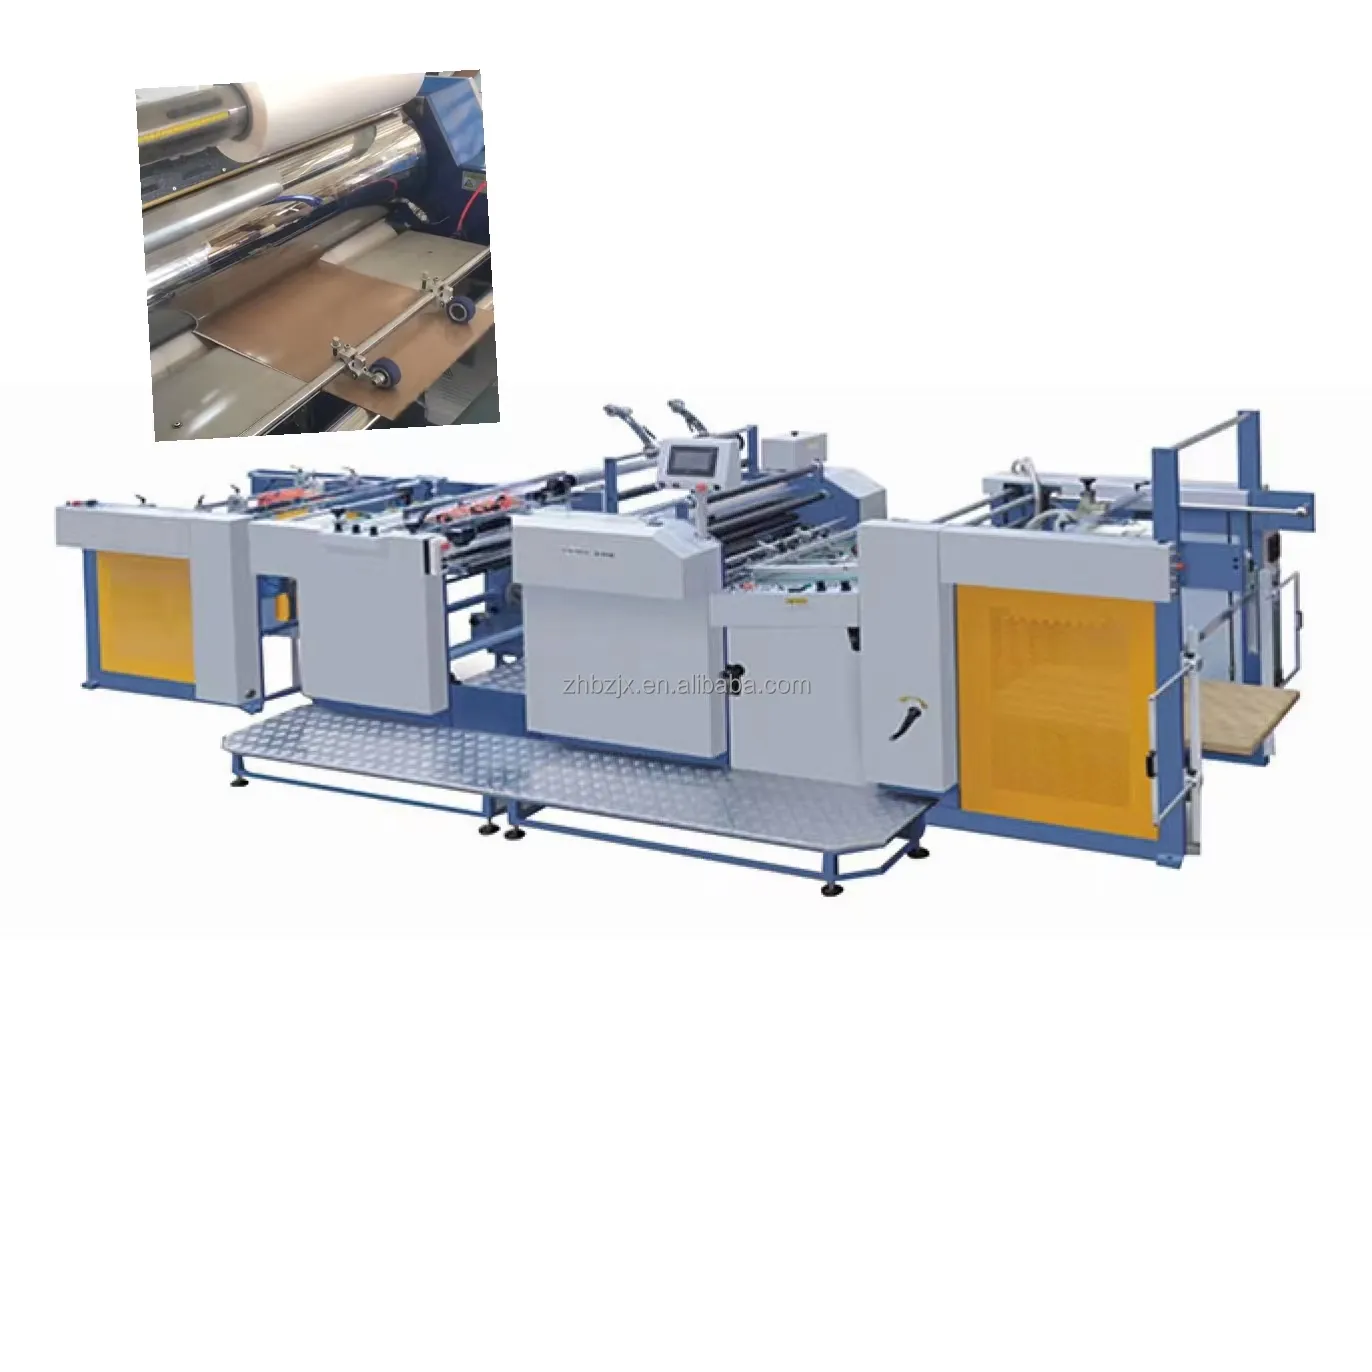 ZHENHUA YTM High Speed Automatic Feeding Cardboard Film Bopp Laminating Machine For Making Corrugated Carton Box